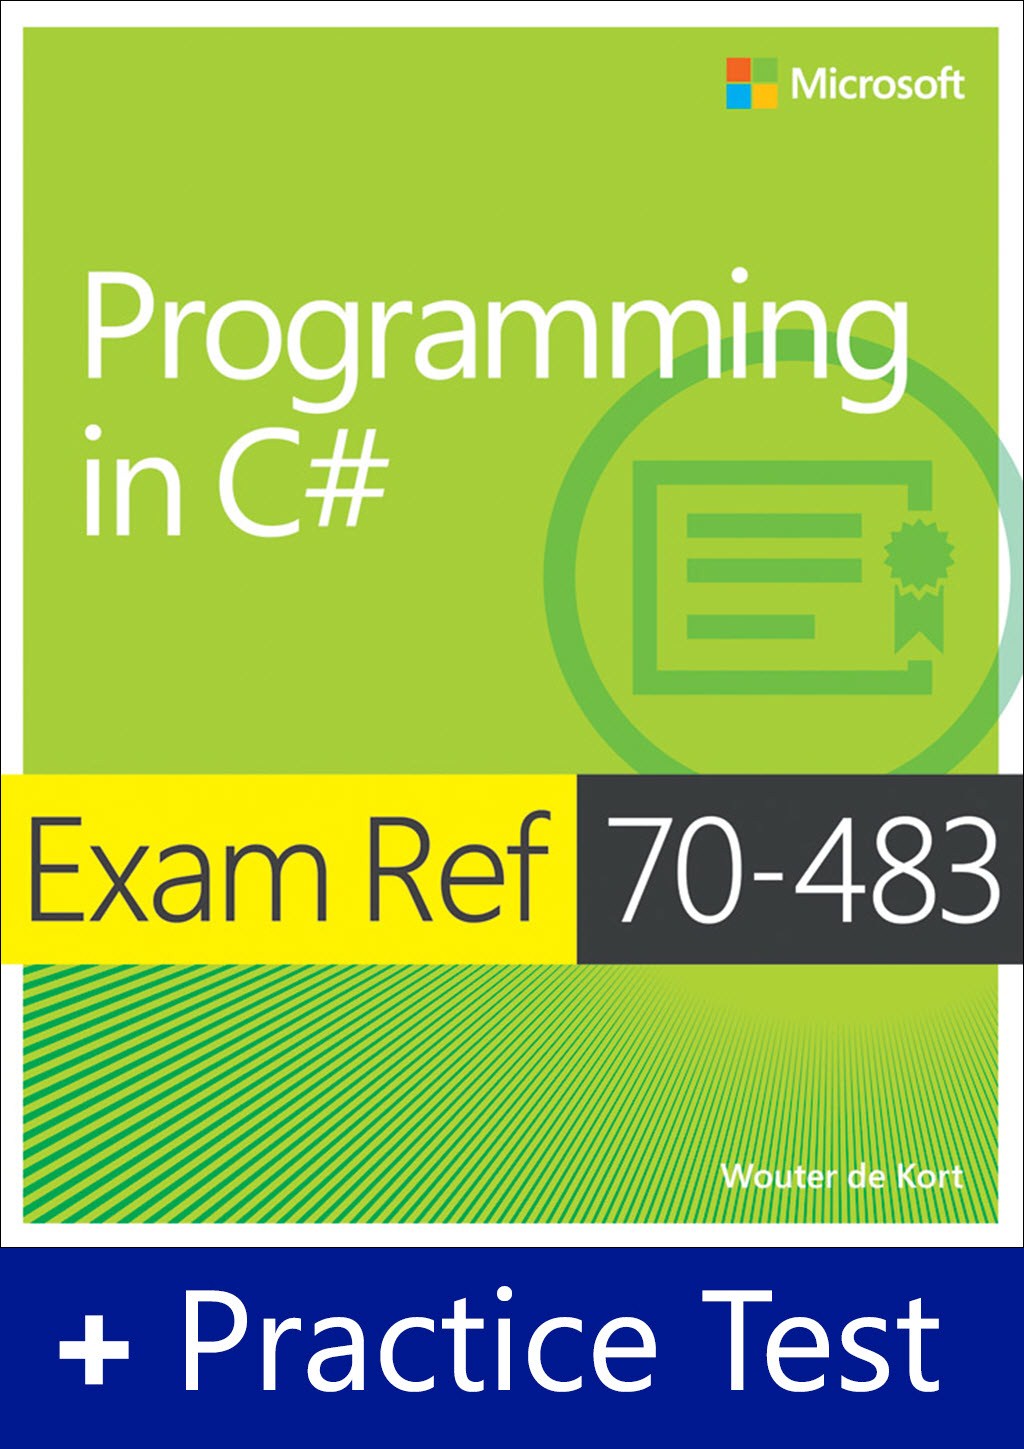 Exam Ref 70-483 Programming in C# with Practice Test